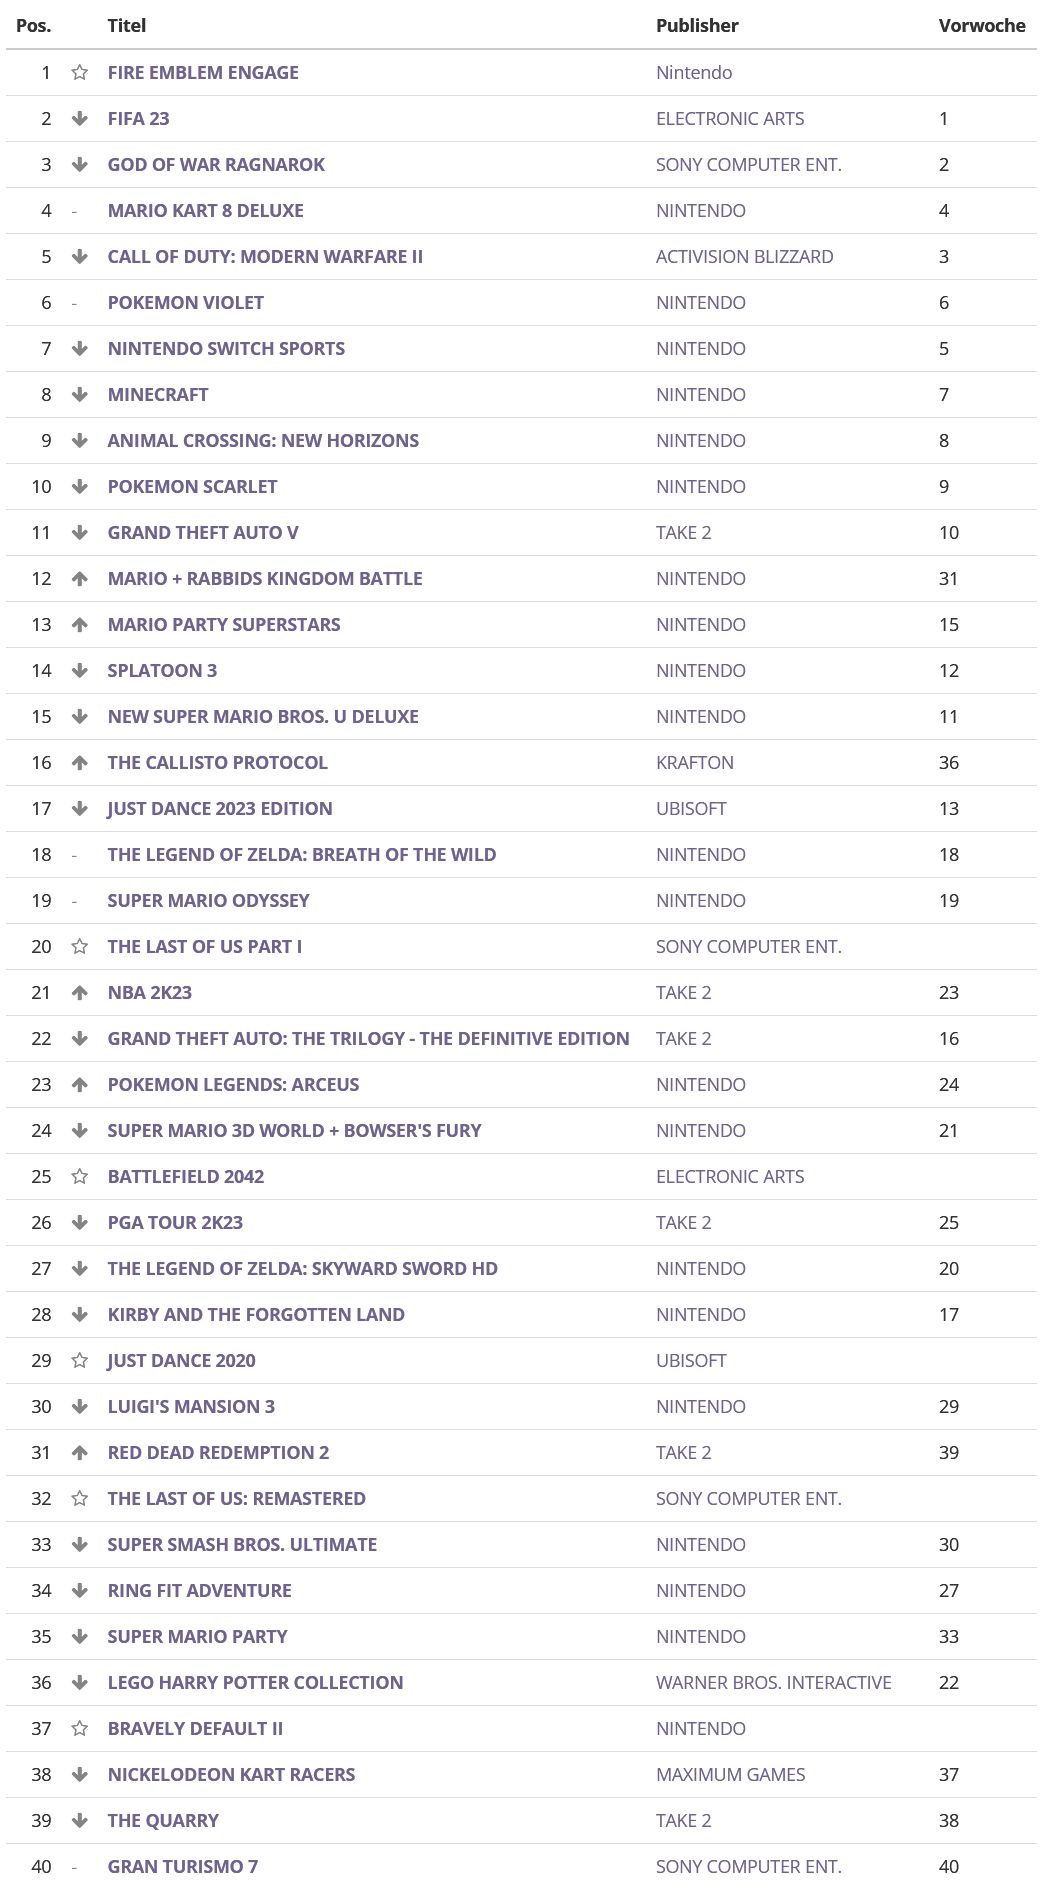 UK Top 40 ENTERTAINMENT SOFTWARE ALLE PREISE 16.01.23 - 21.01.23